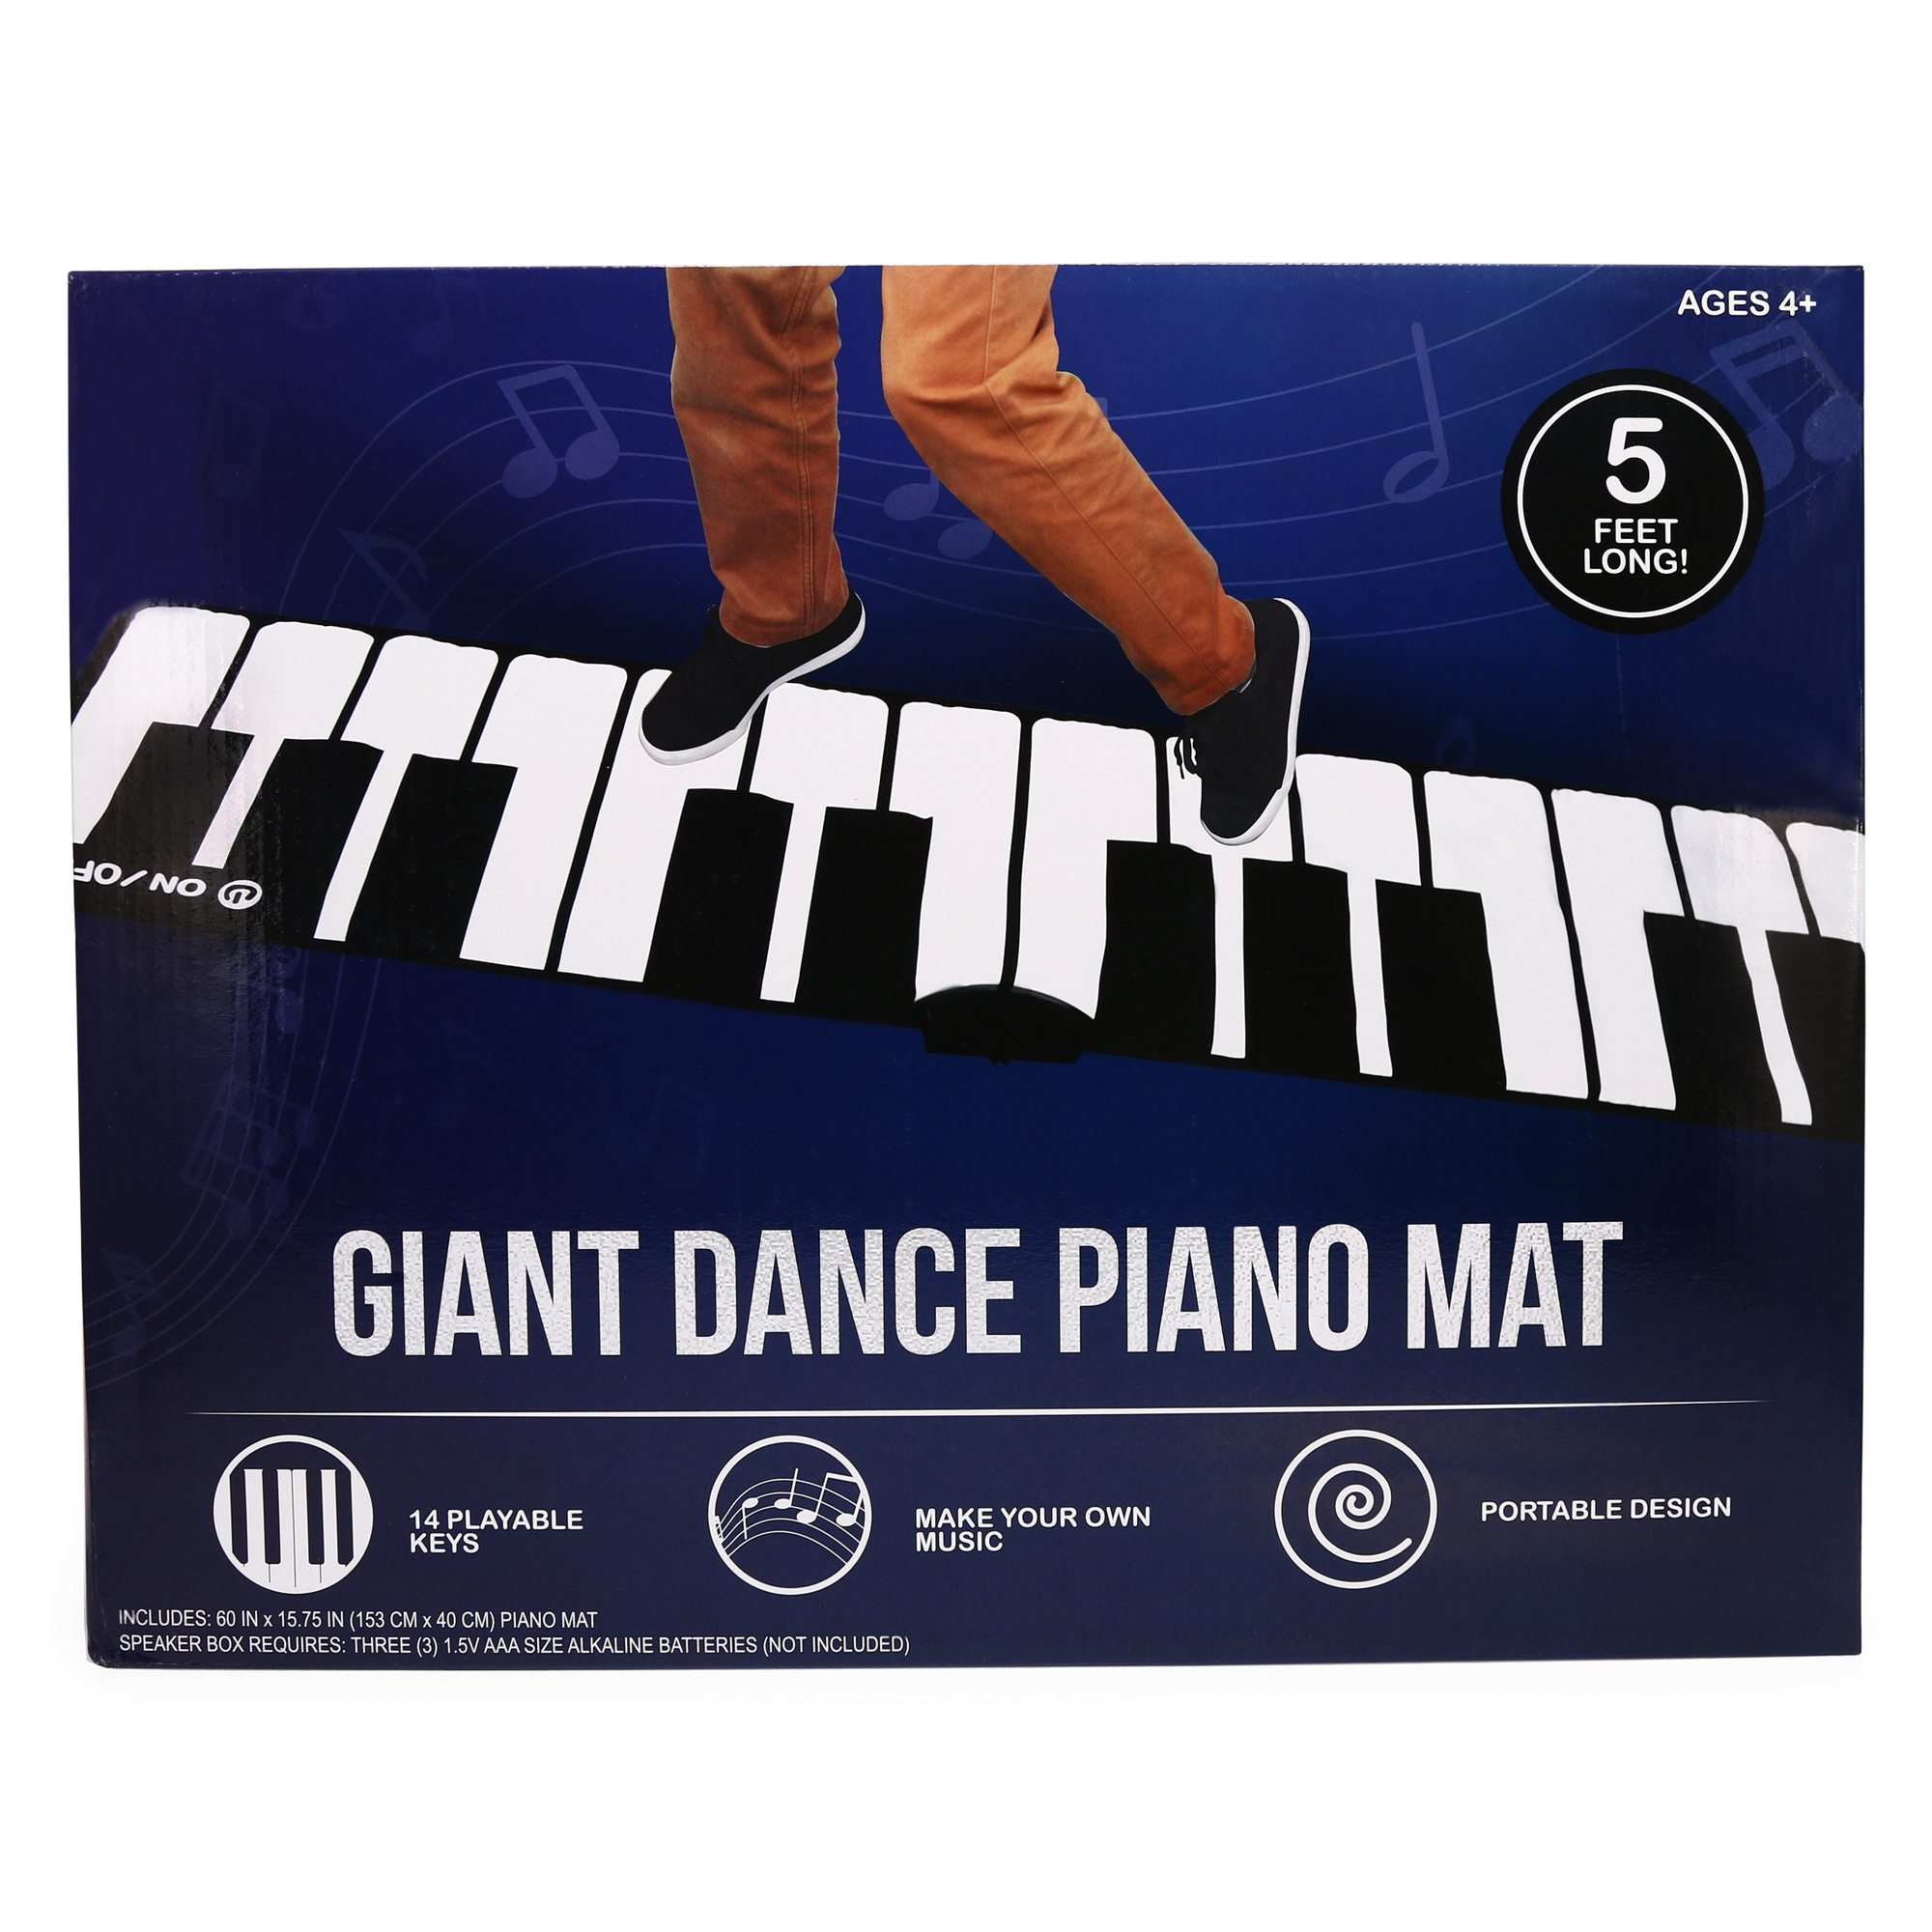 giant dance piano mat 60in | Five